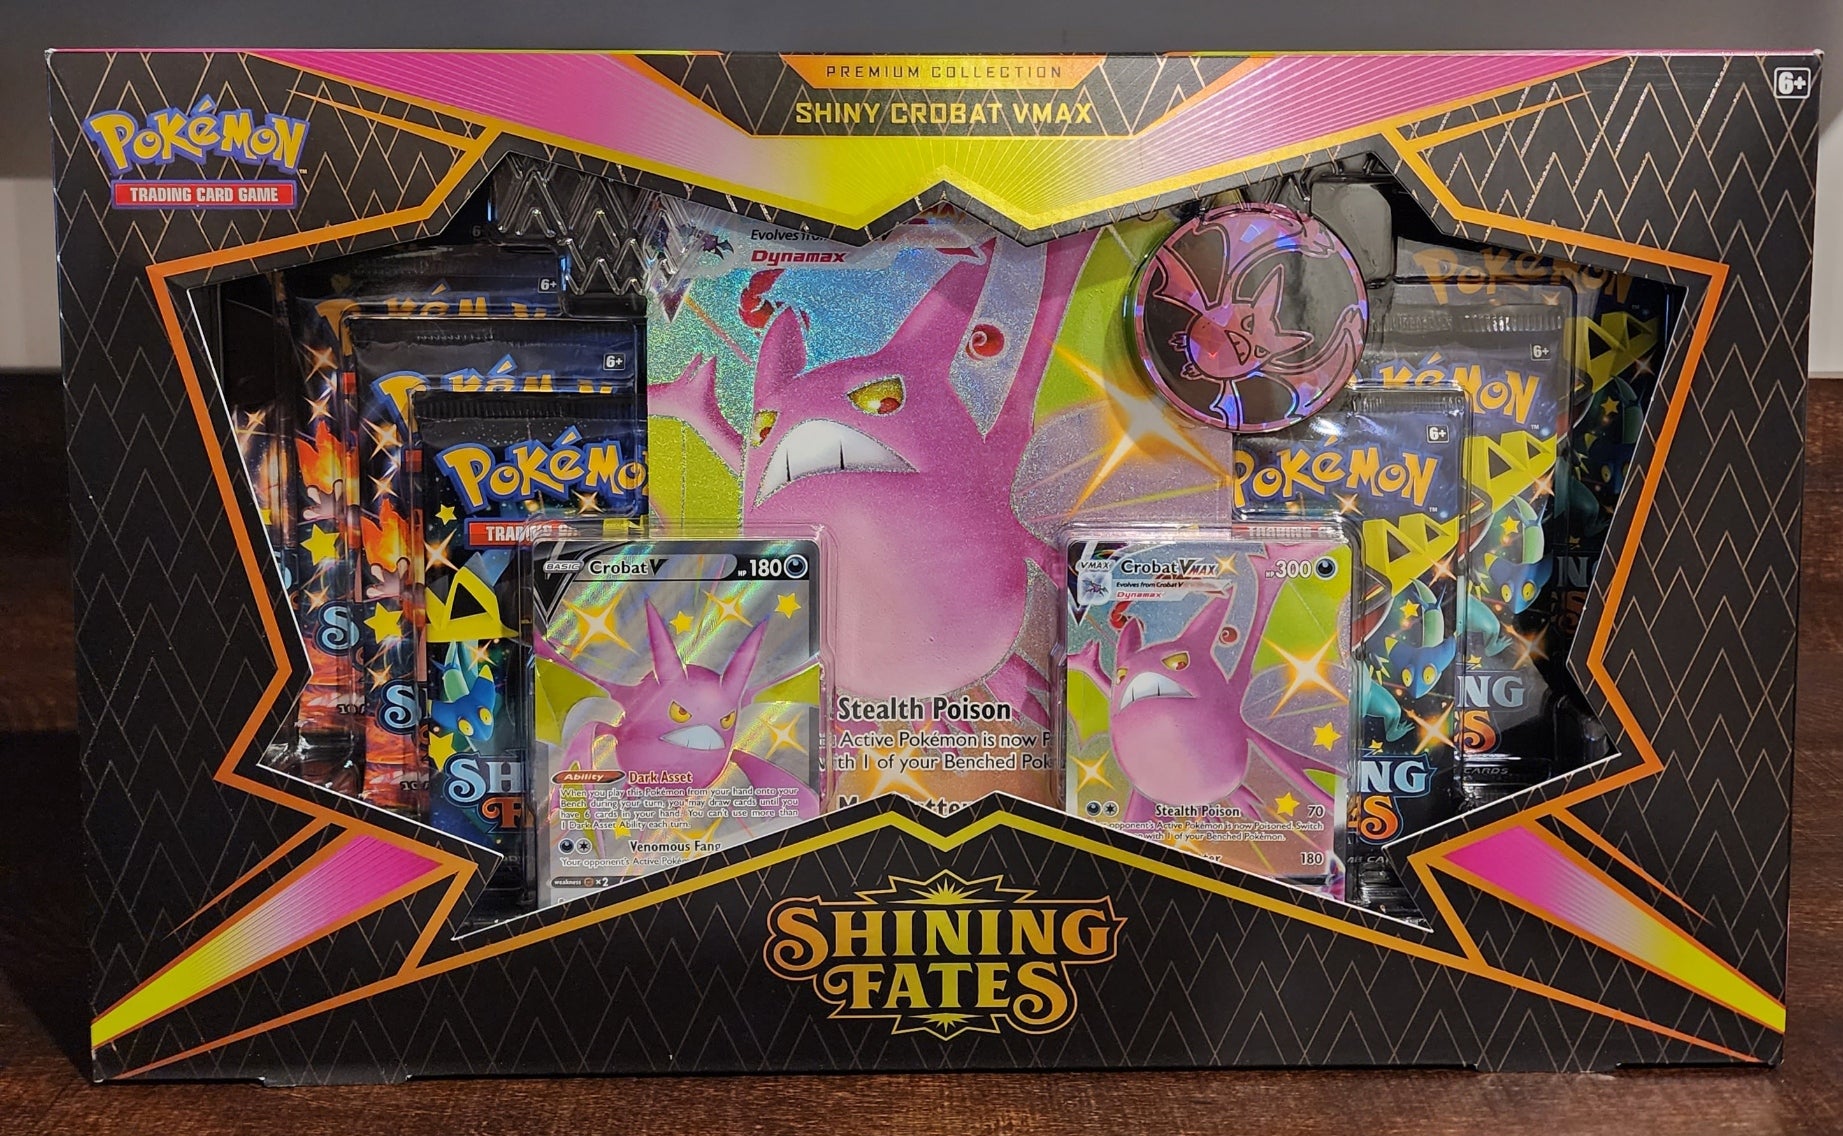 Pokémon TCG: Shining Fates Premium Collection (Shiny Crobat VMAX 